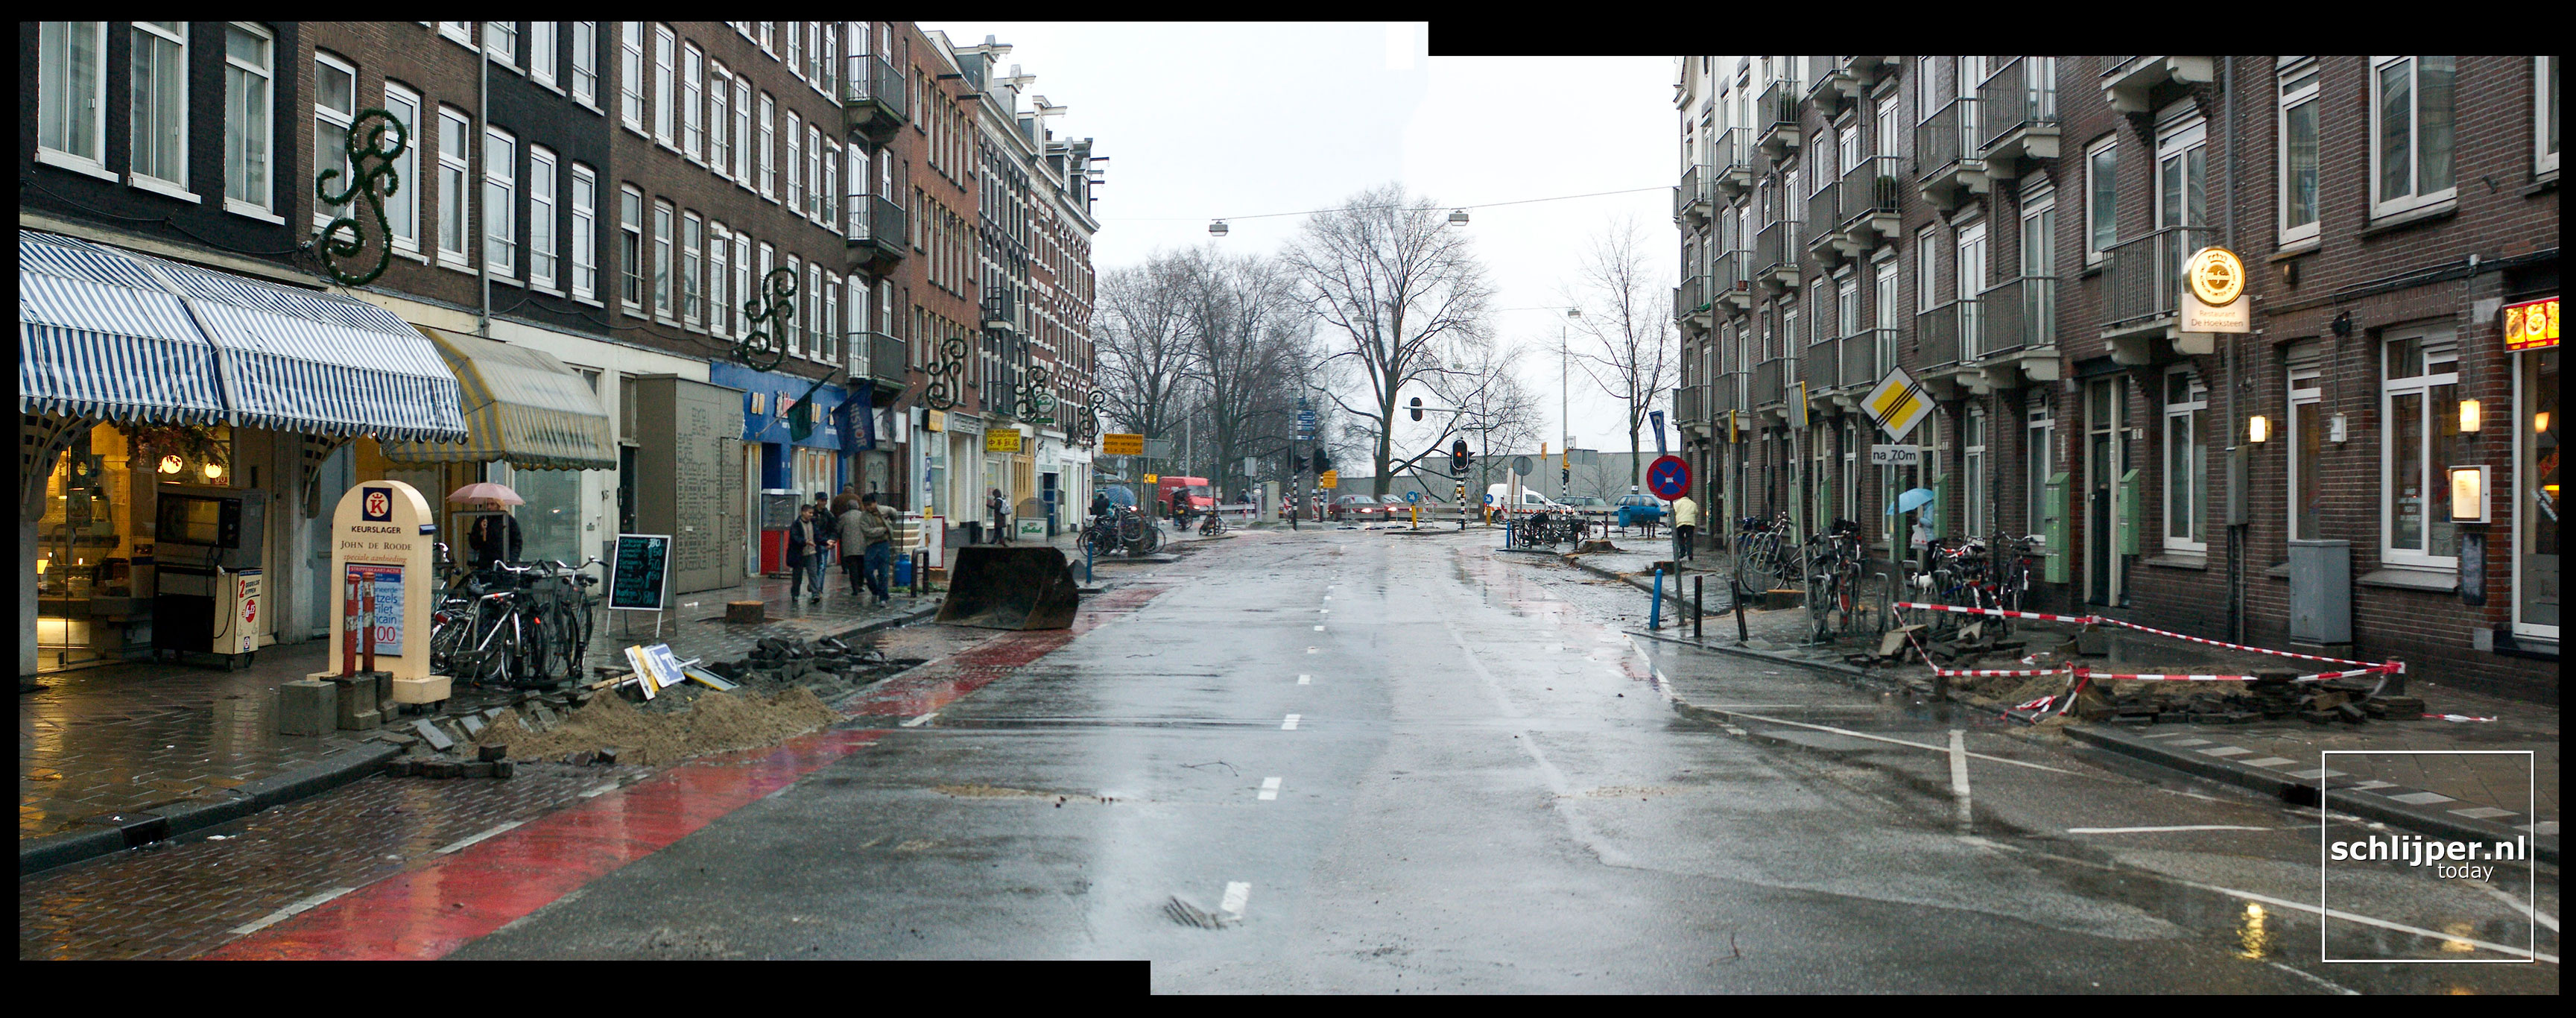 Nederland, Amsterdam, 19 januari 2004